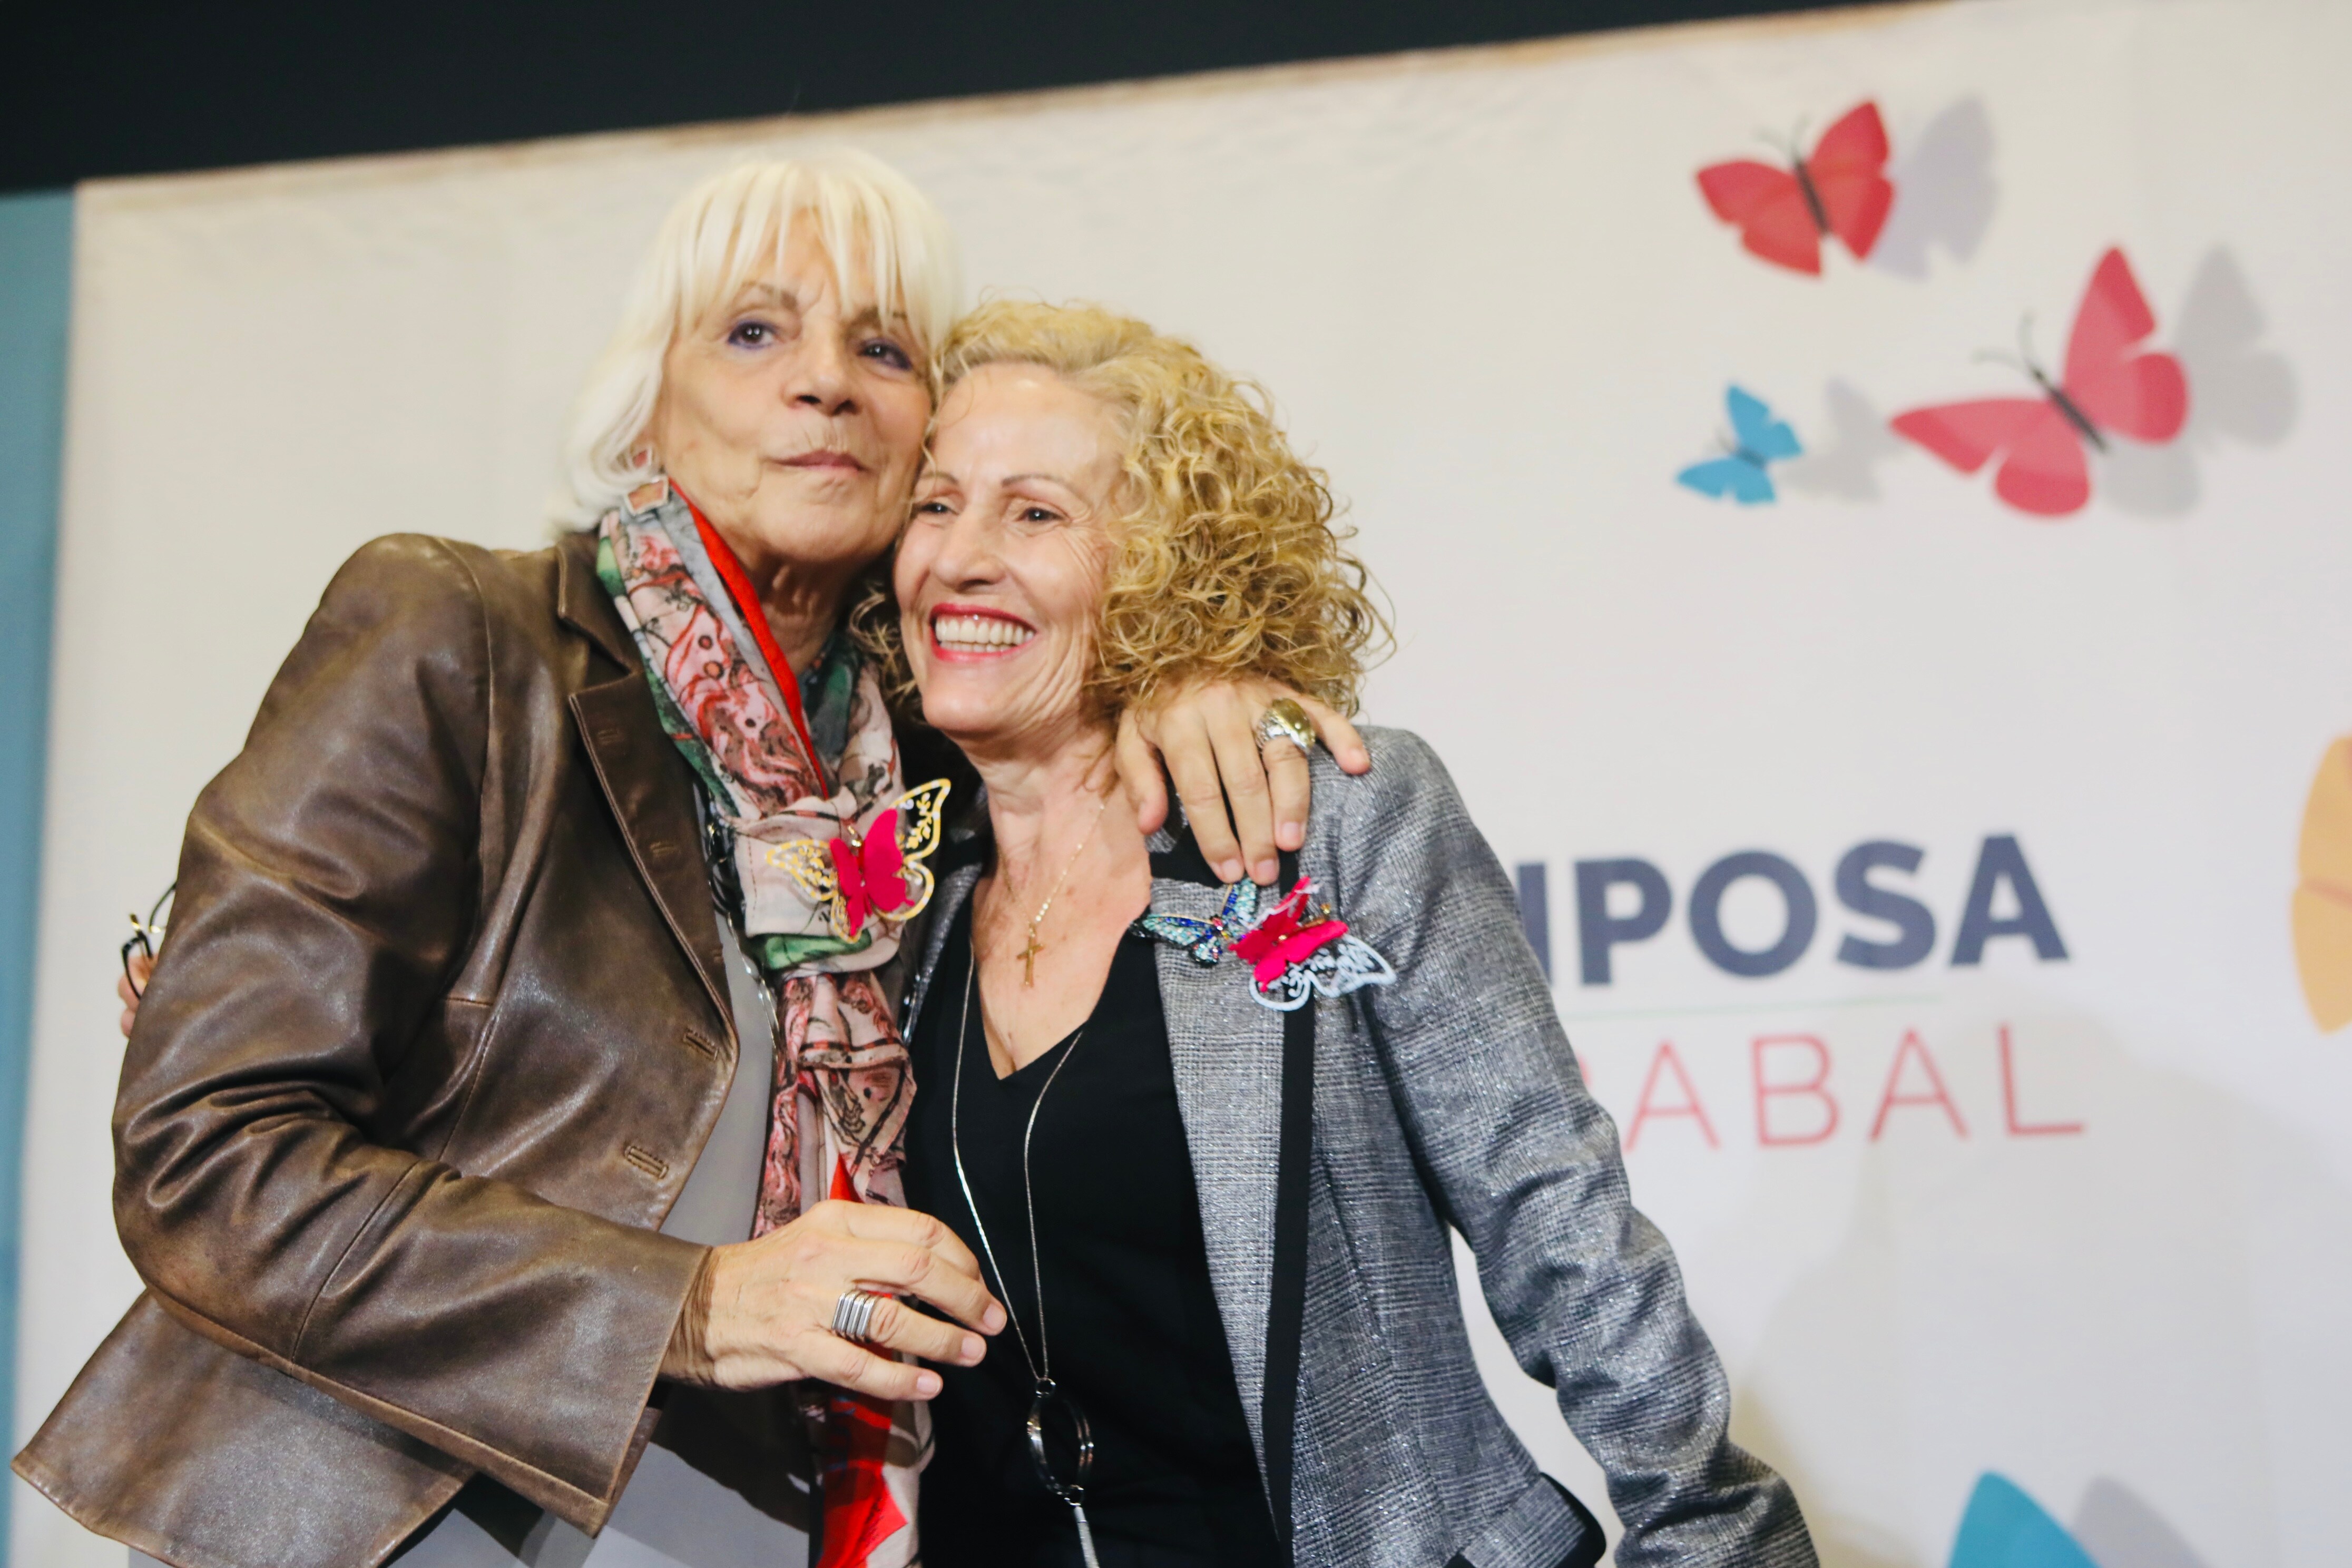 Fotos: Entrega del VIII Premio Mariposas